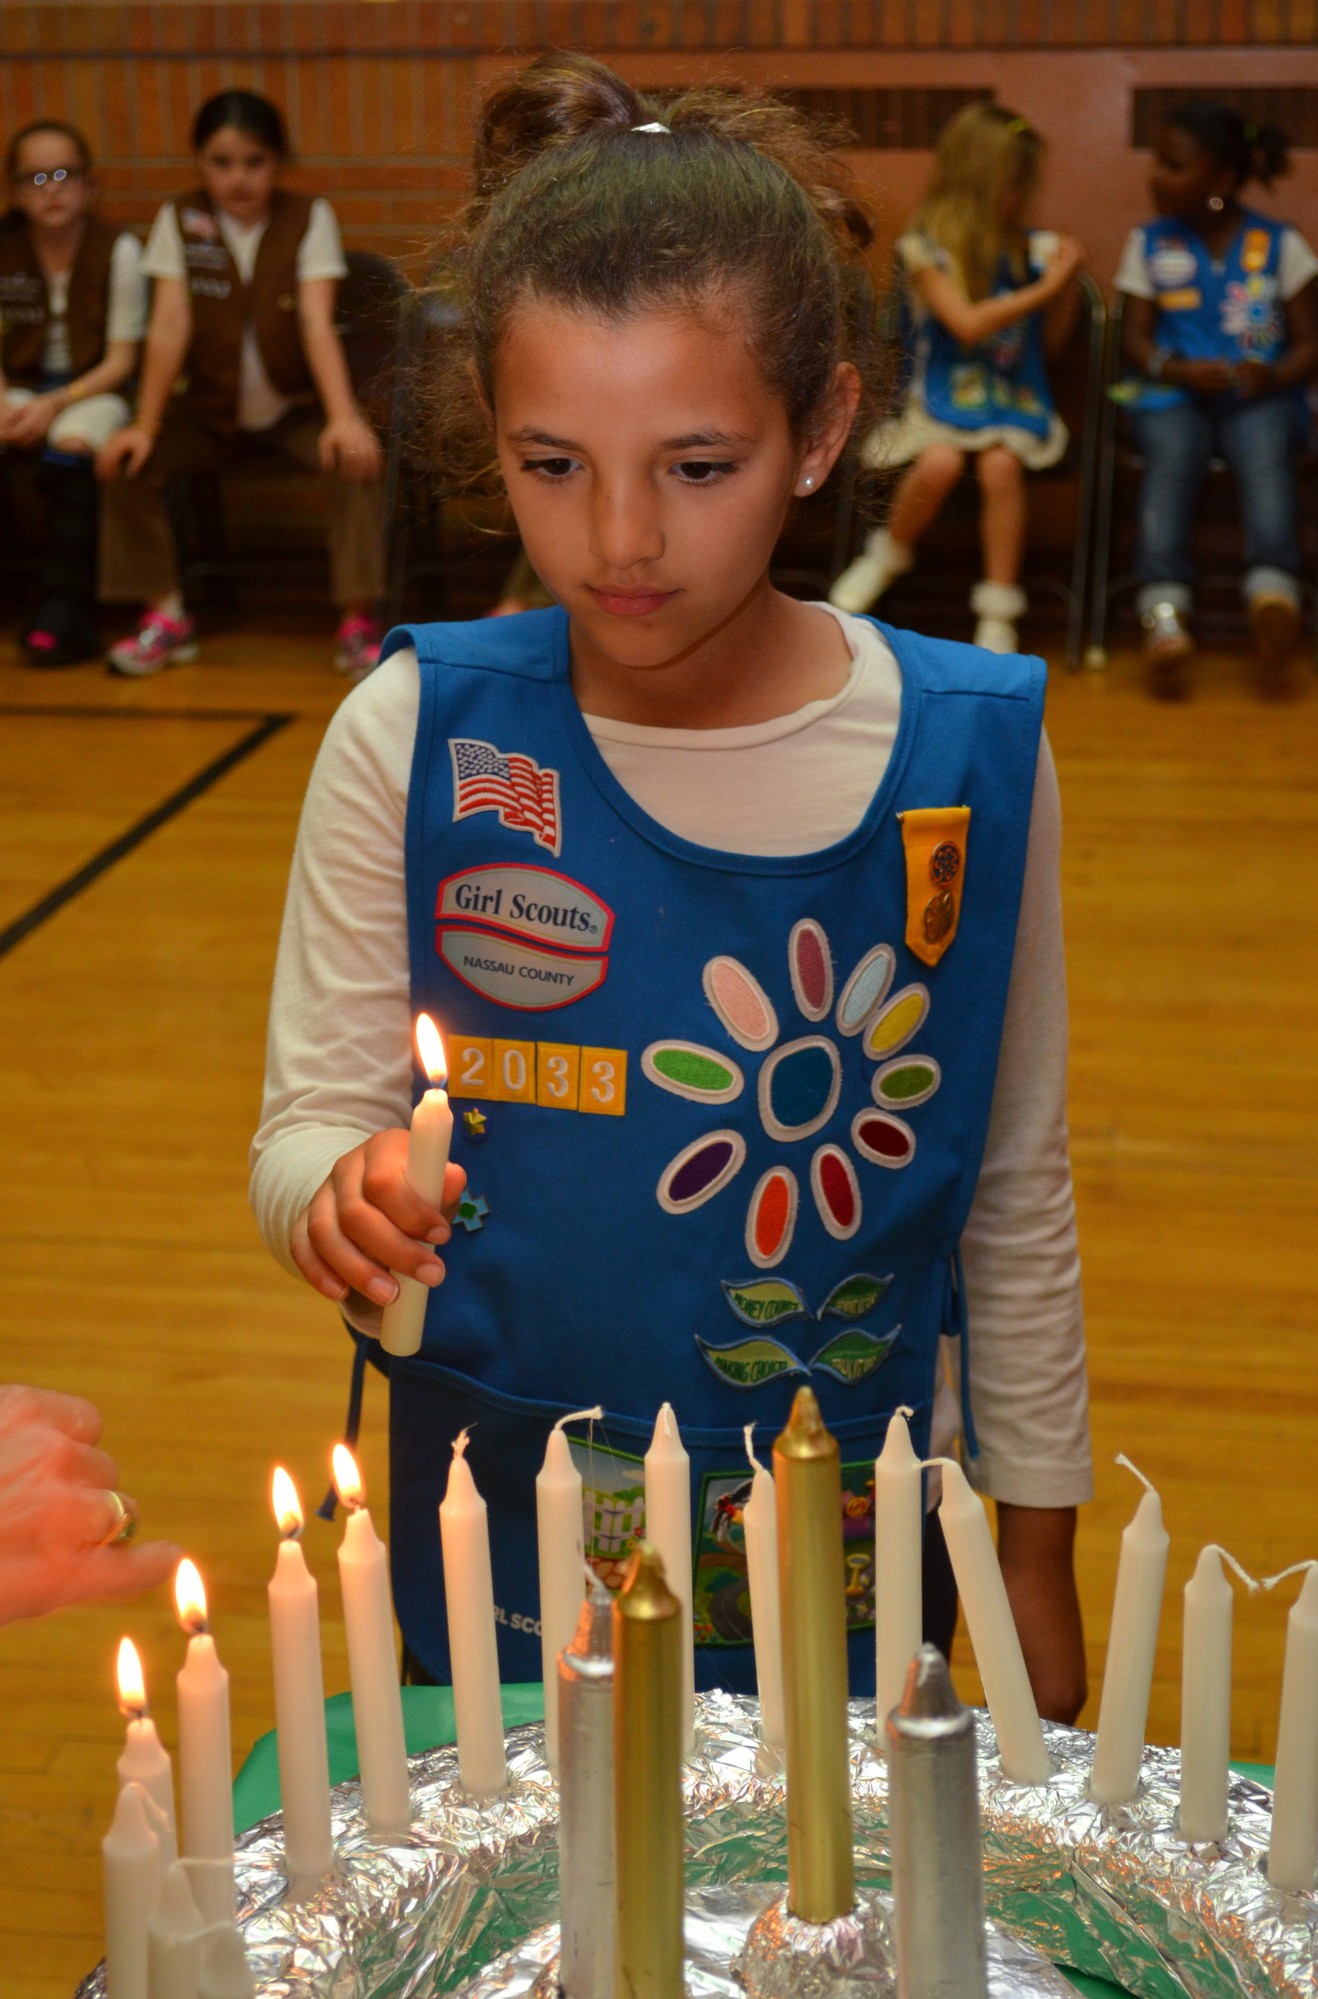 Ariel Navarro of Troop 2033 took part in the candle-lighting ceremony.